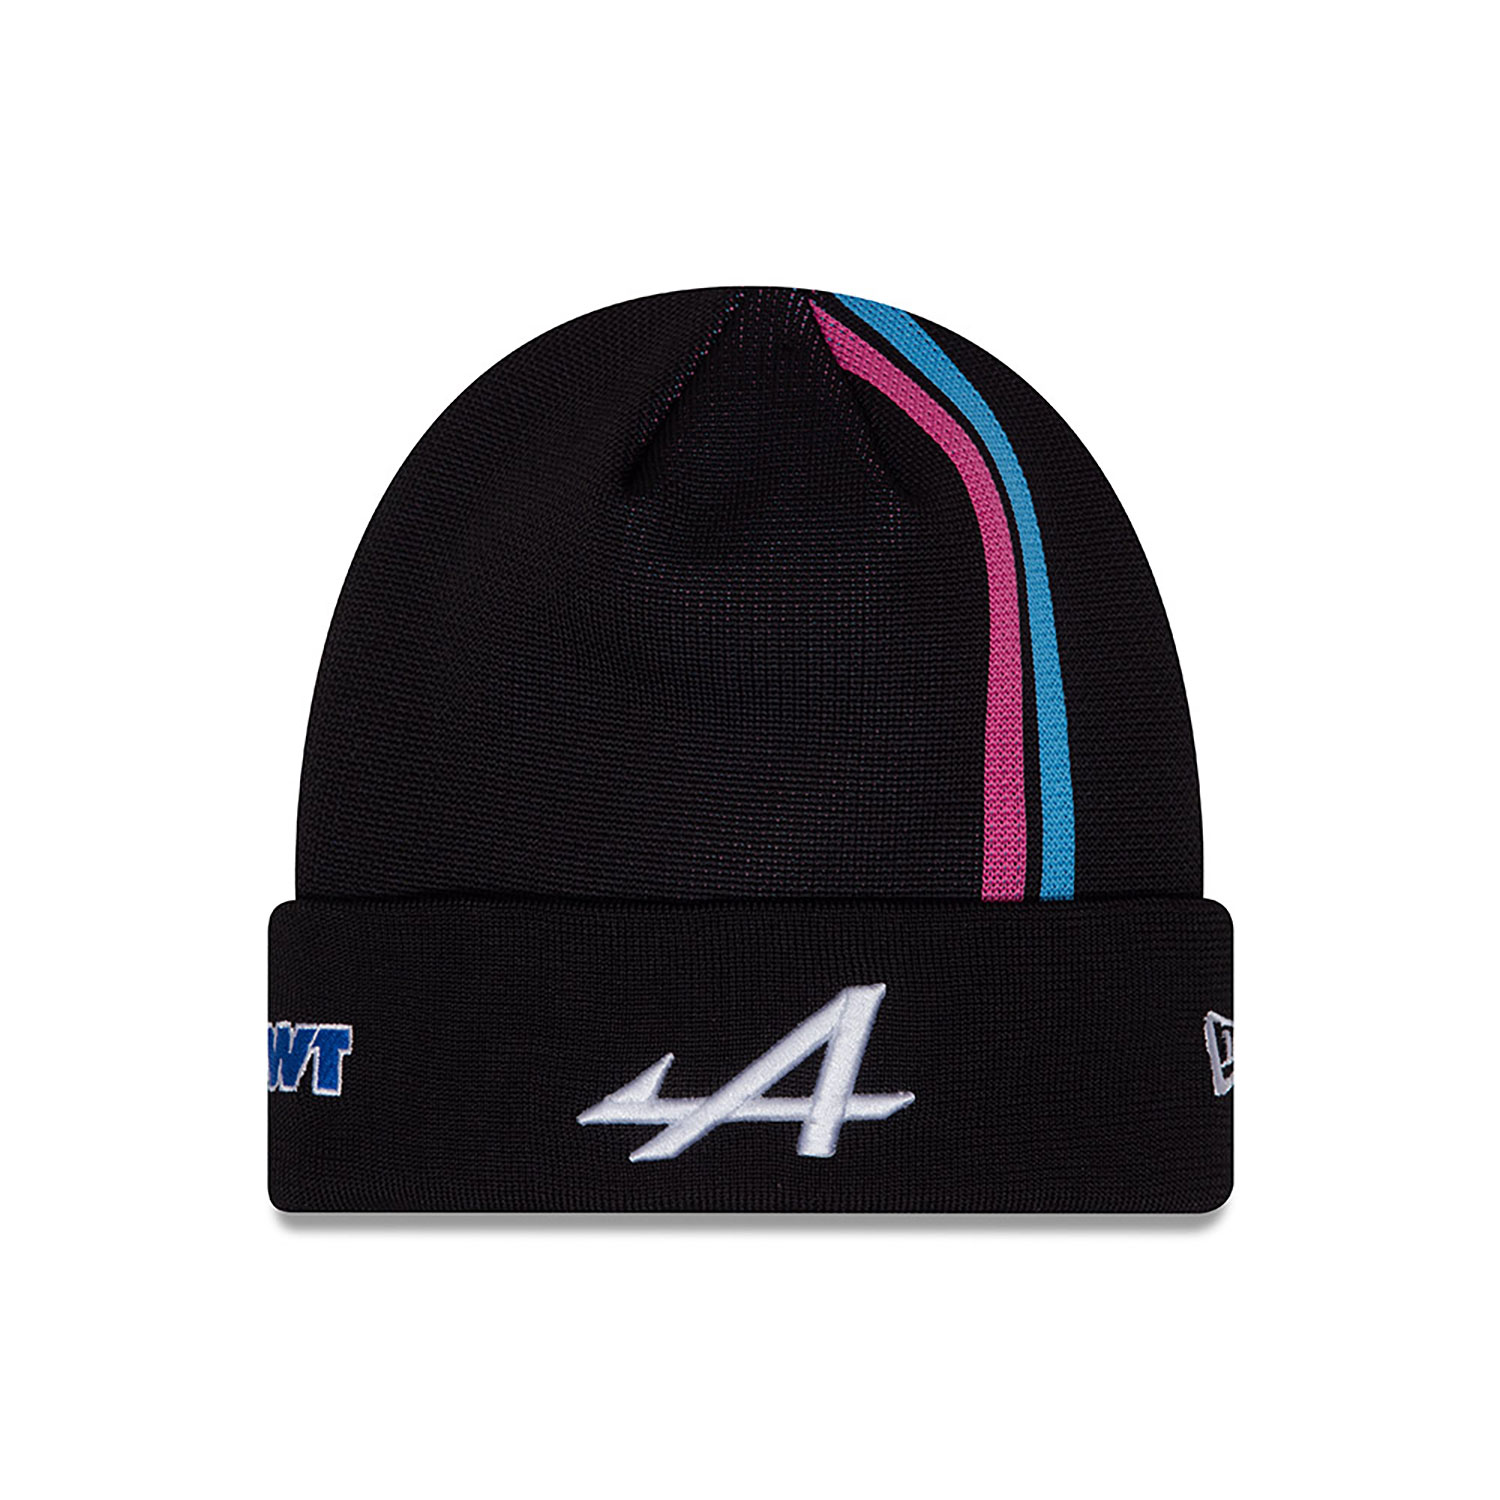 Alpine Racing Pierre Gasly Black Stripe Cuff Knit Beanie Hat